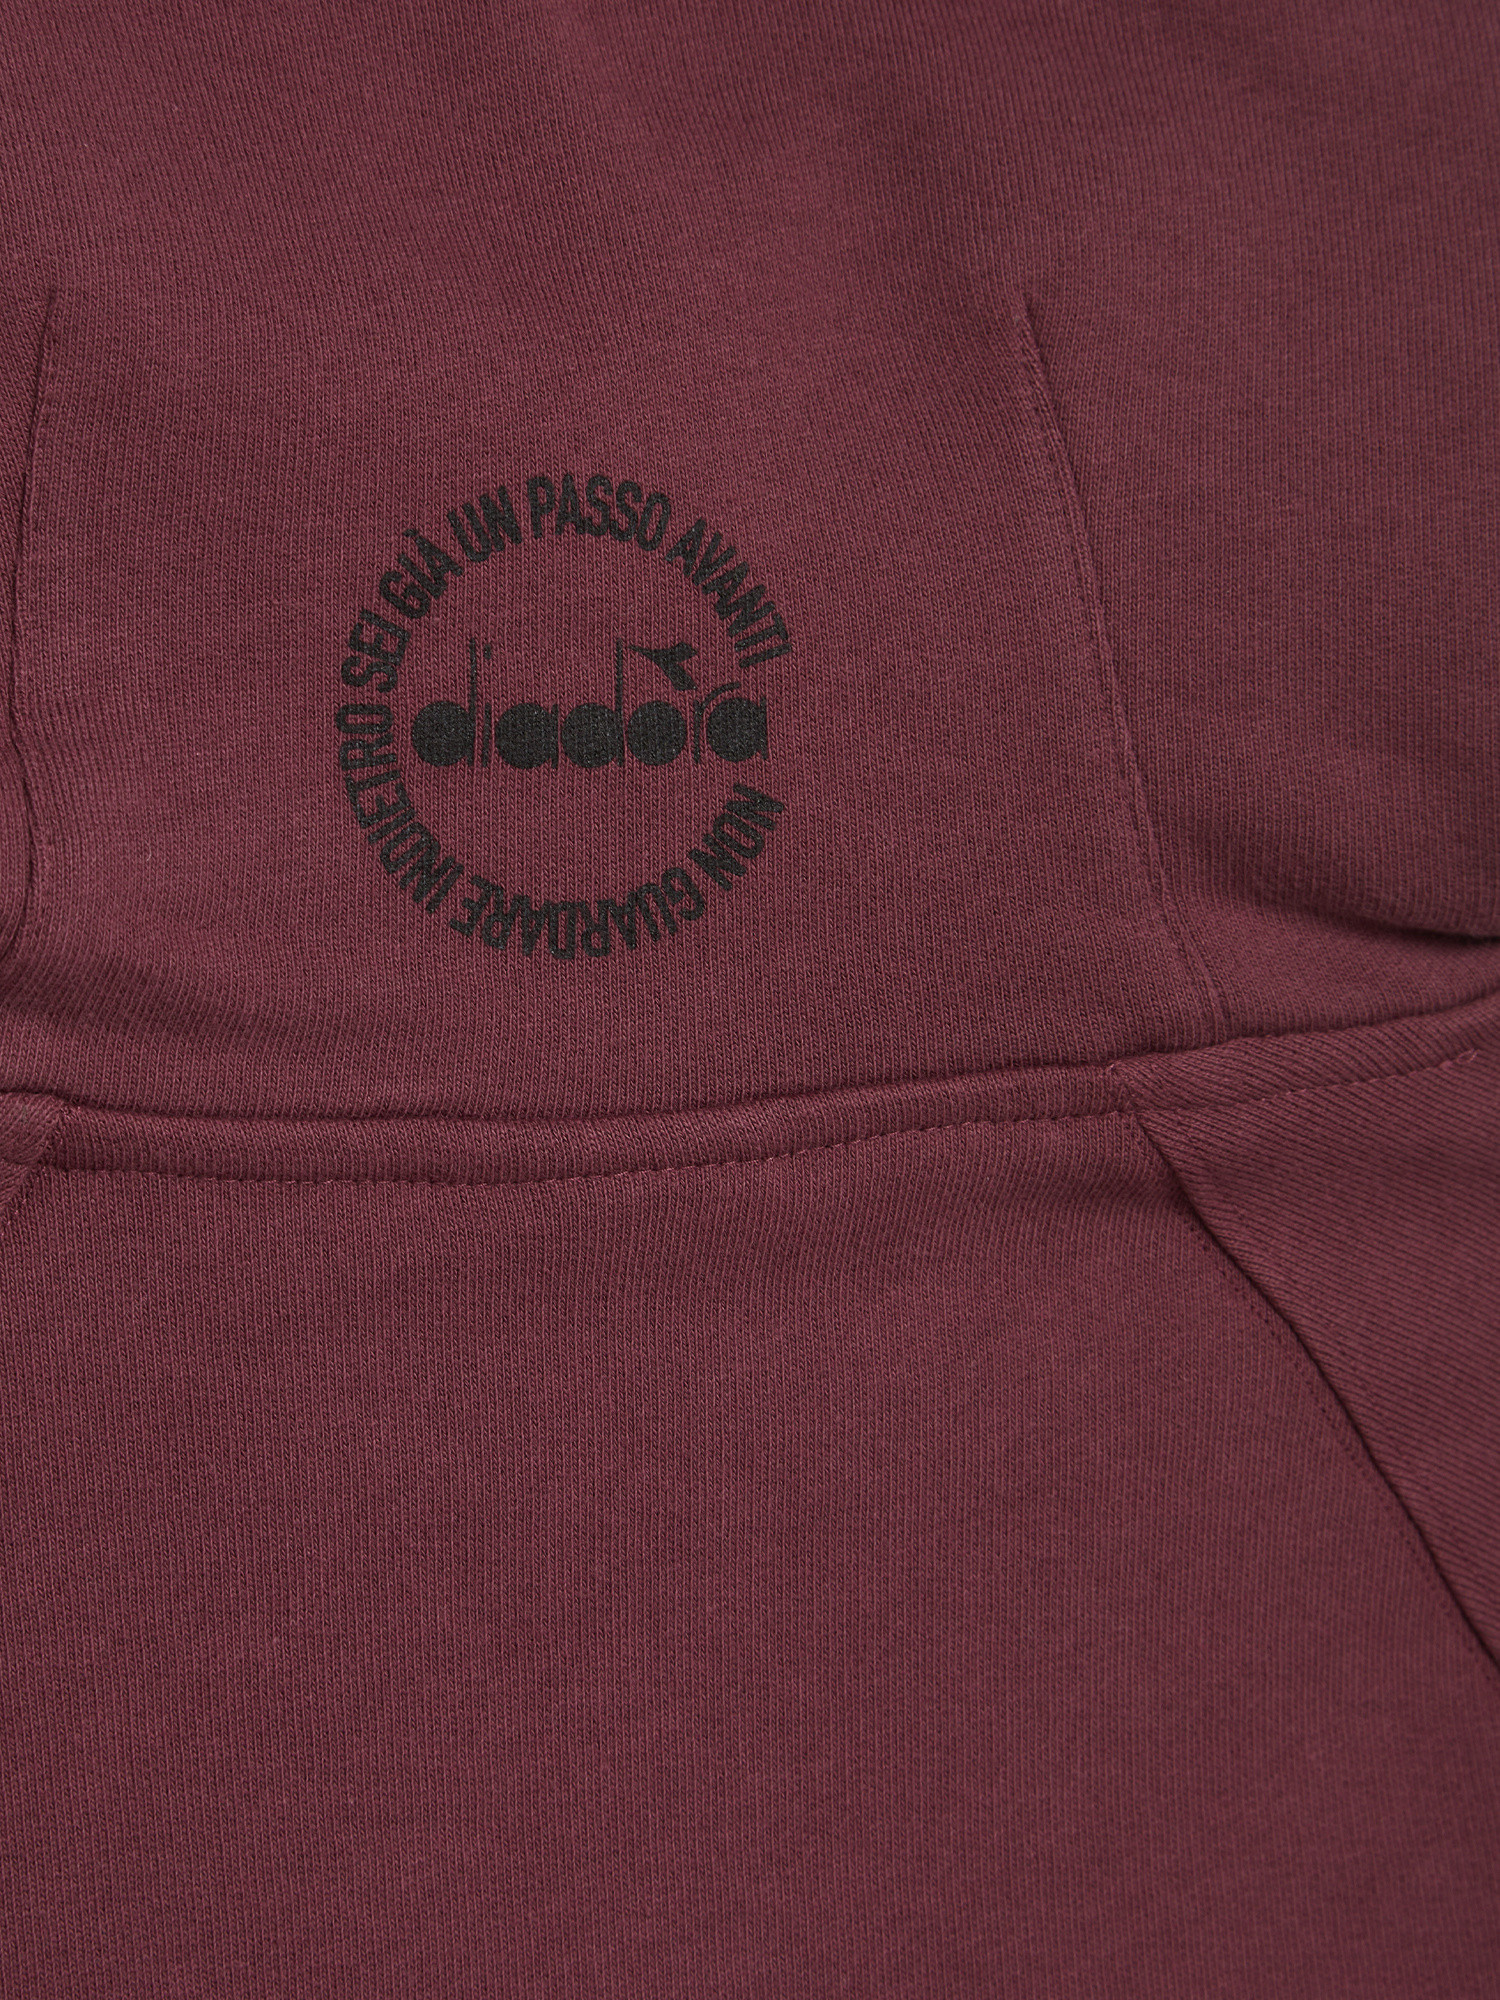 Diadora - Manifesto cotton hoodie, Purple, large image number 1